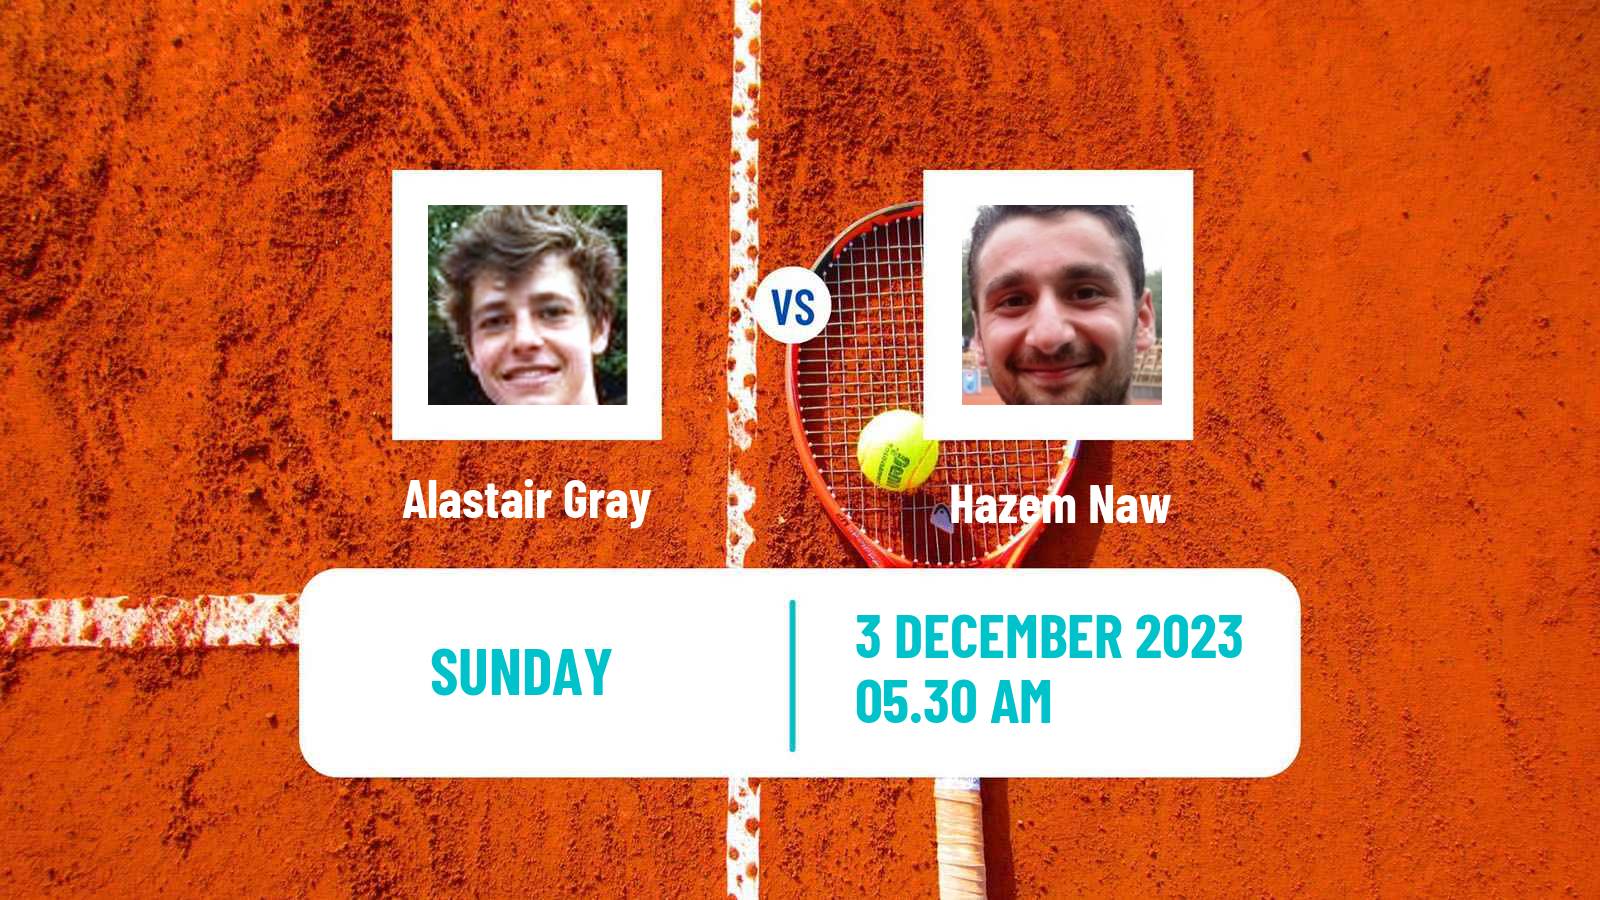 Tennis ITF M15 Madrid 2 Men Alastair Gray - Hazem Naw